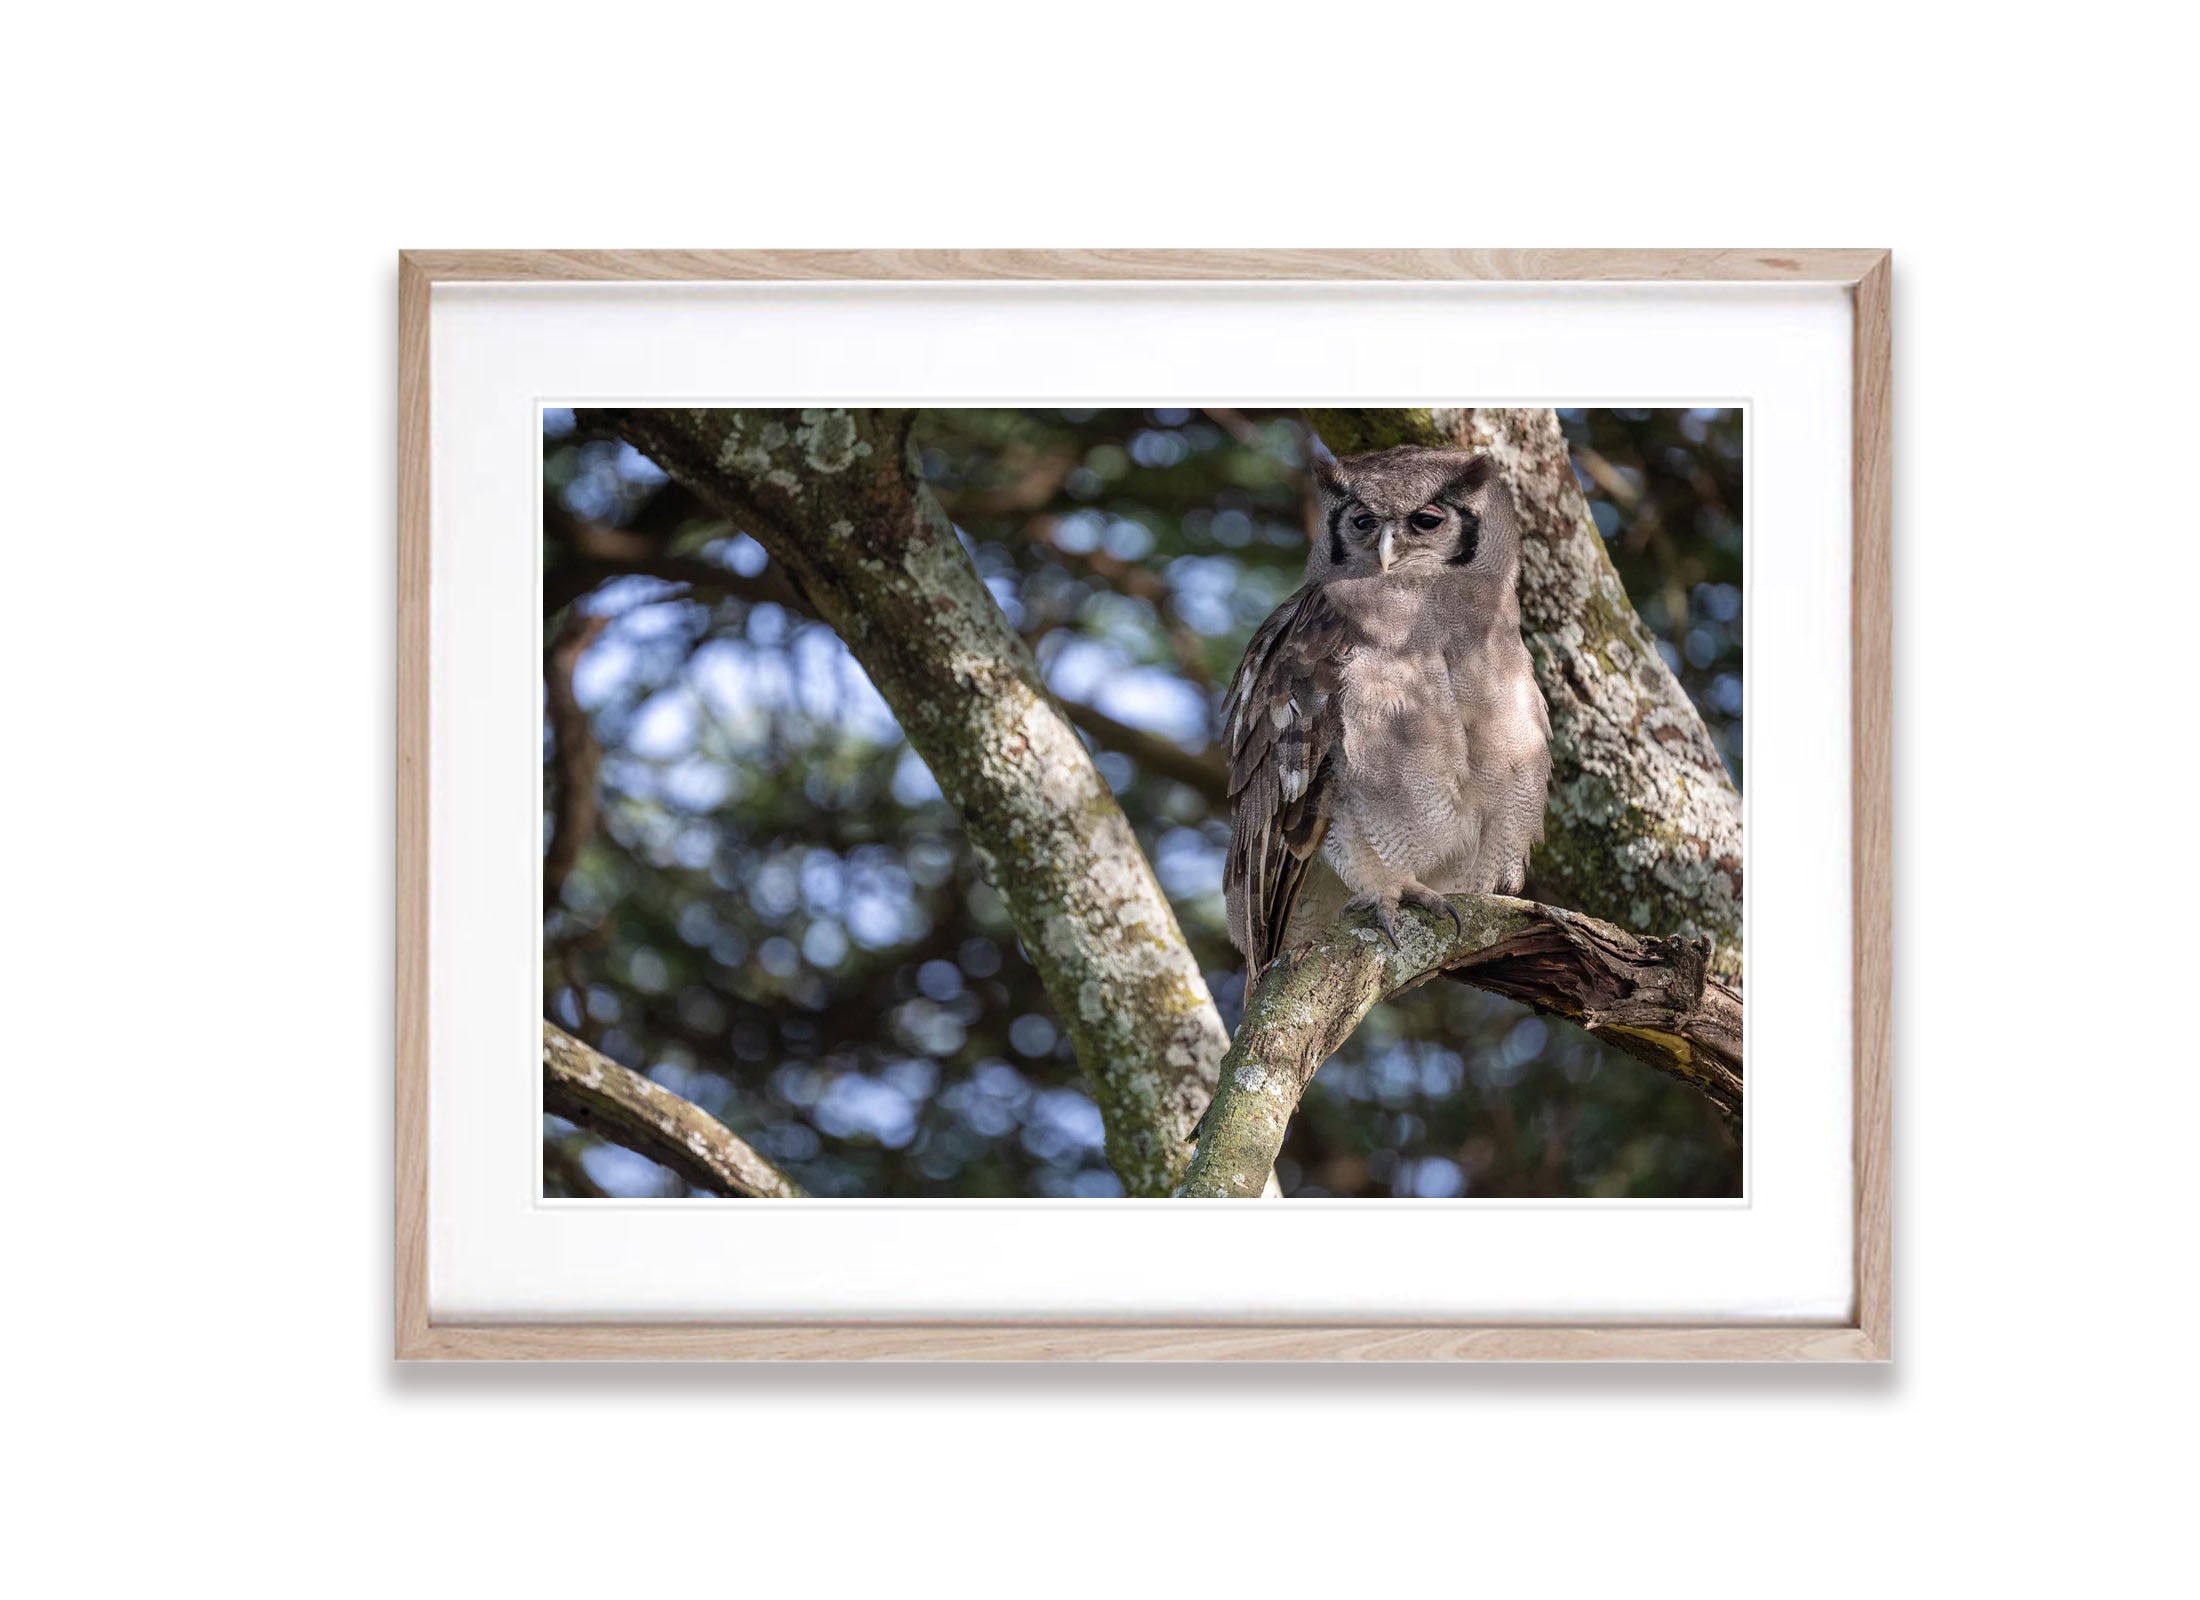 Verreaux's Eagle-Owl, Tanzania